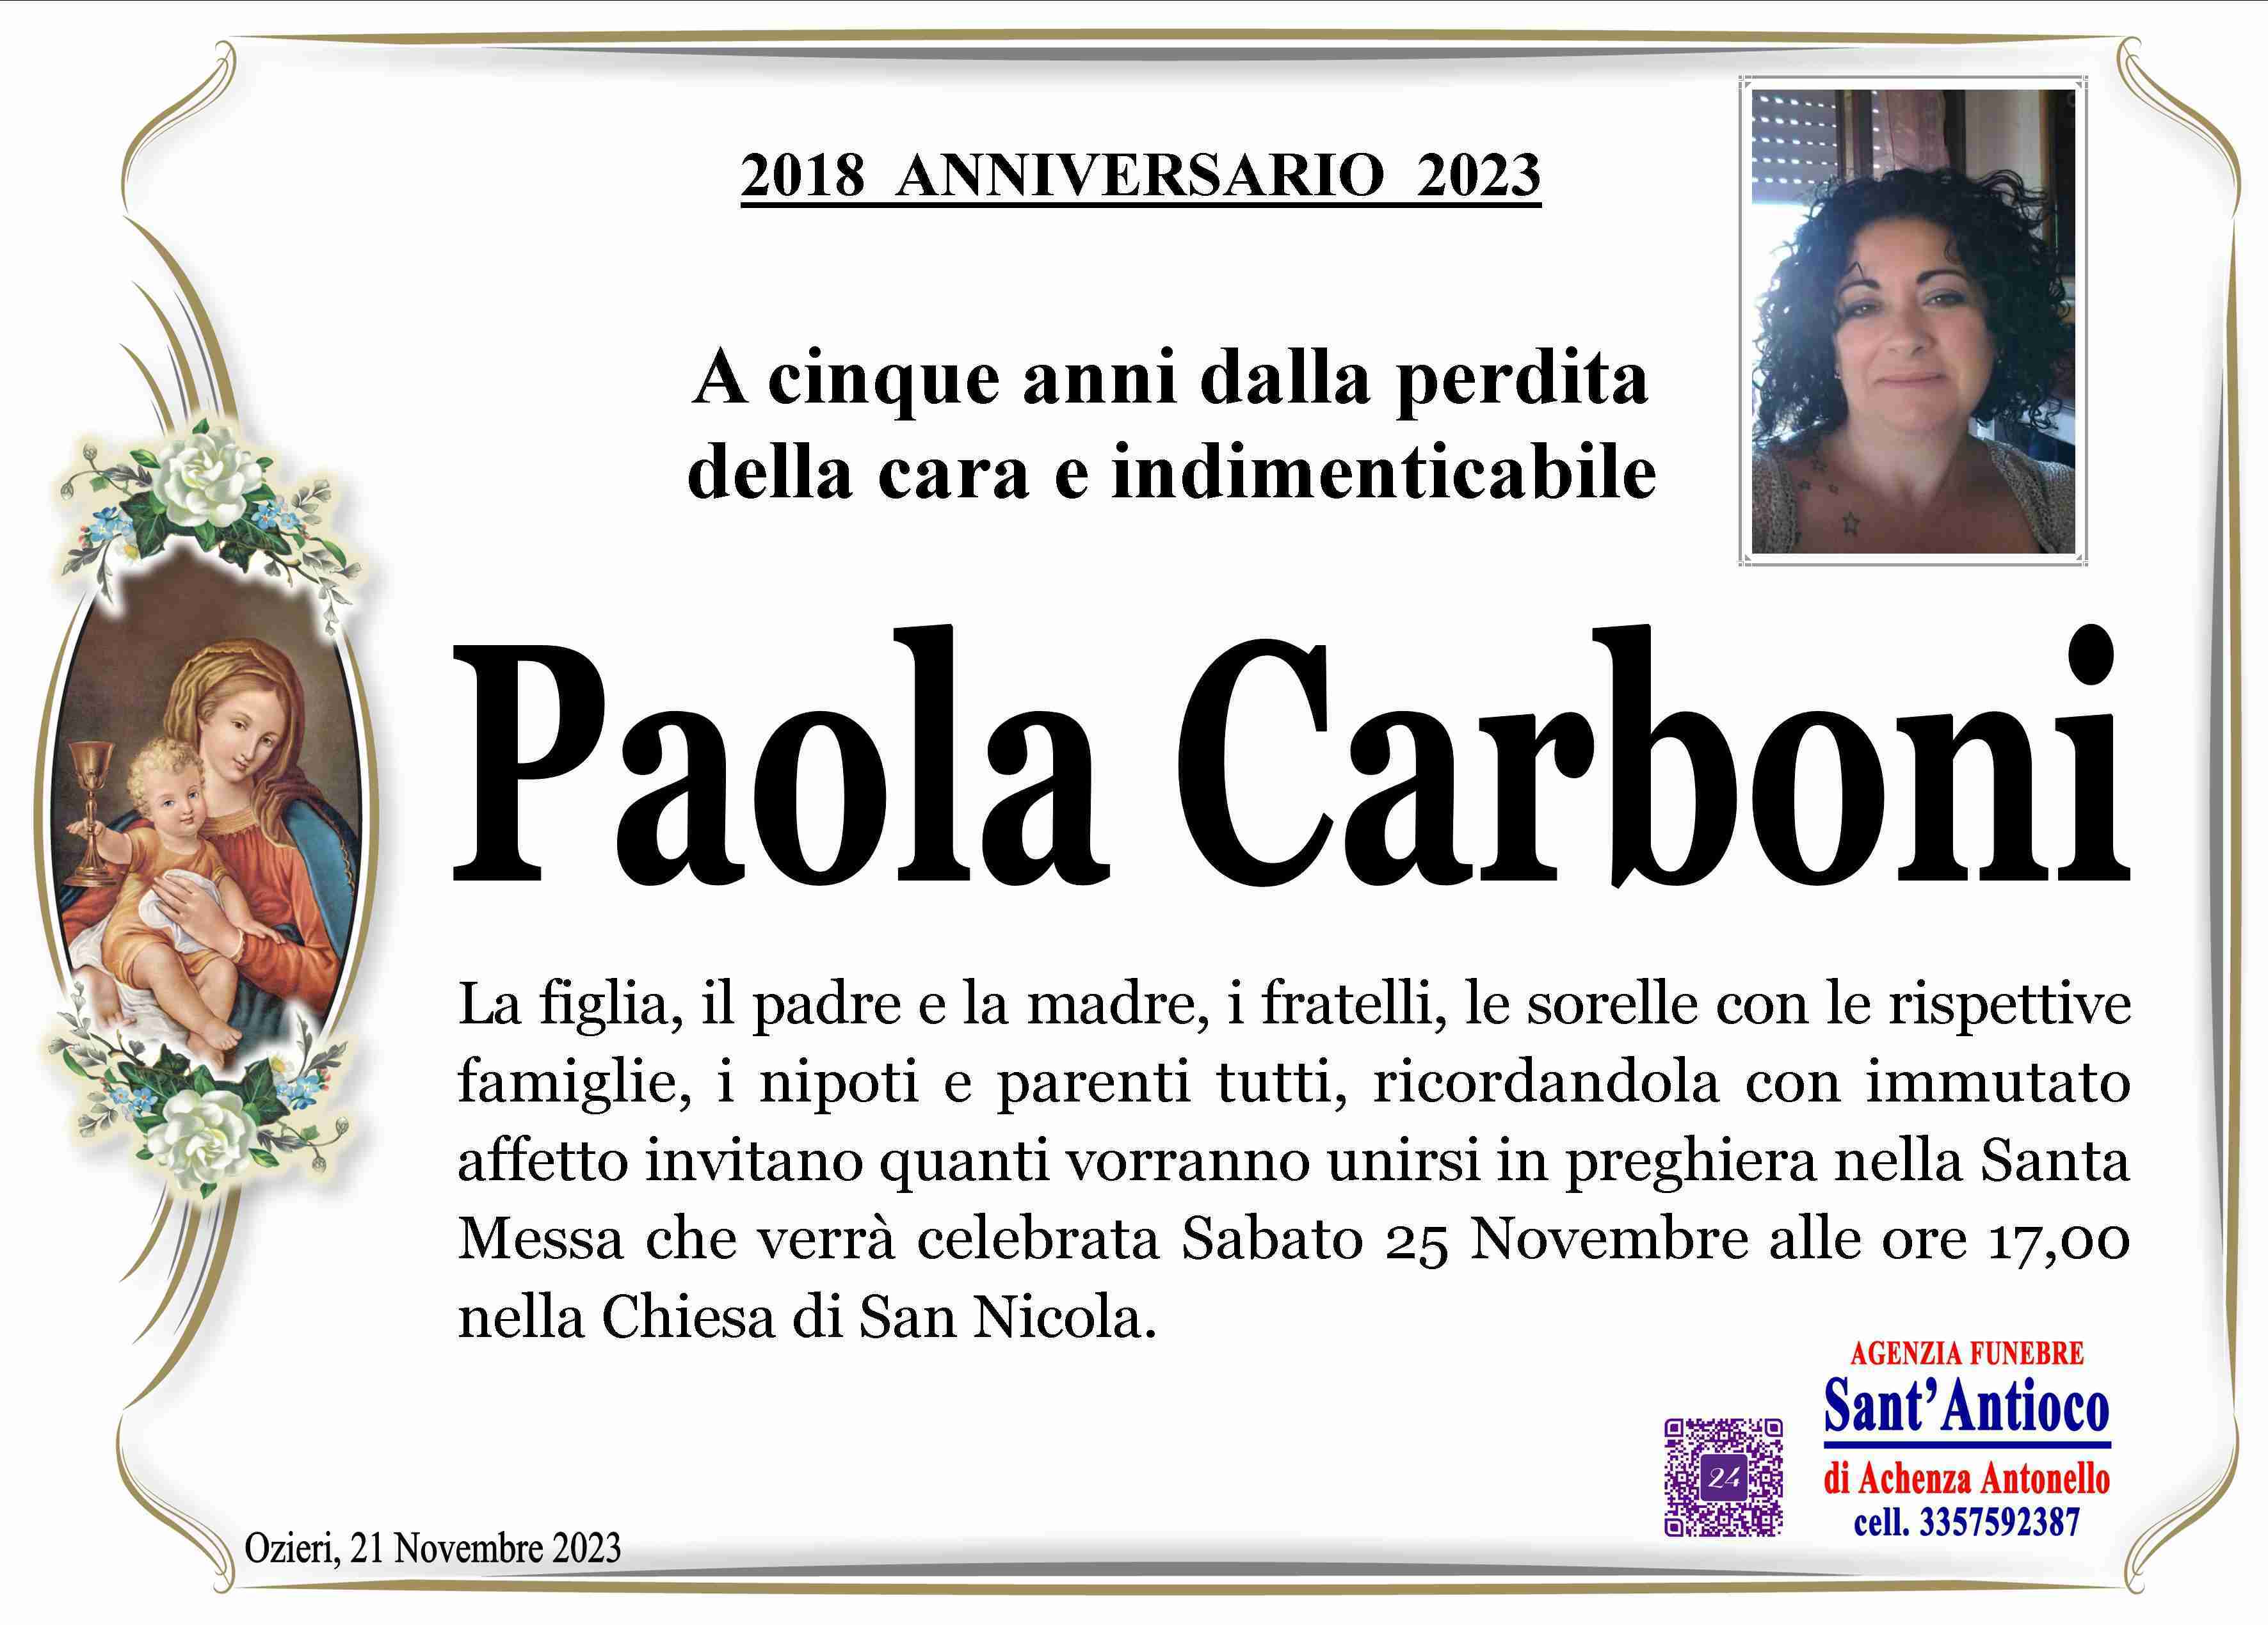 Paola Carboni